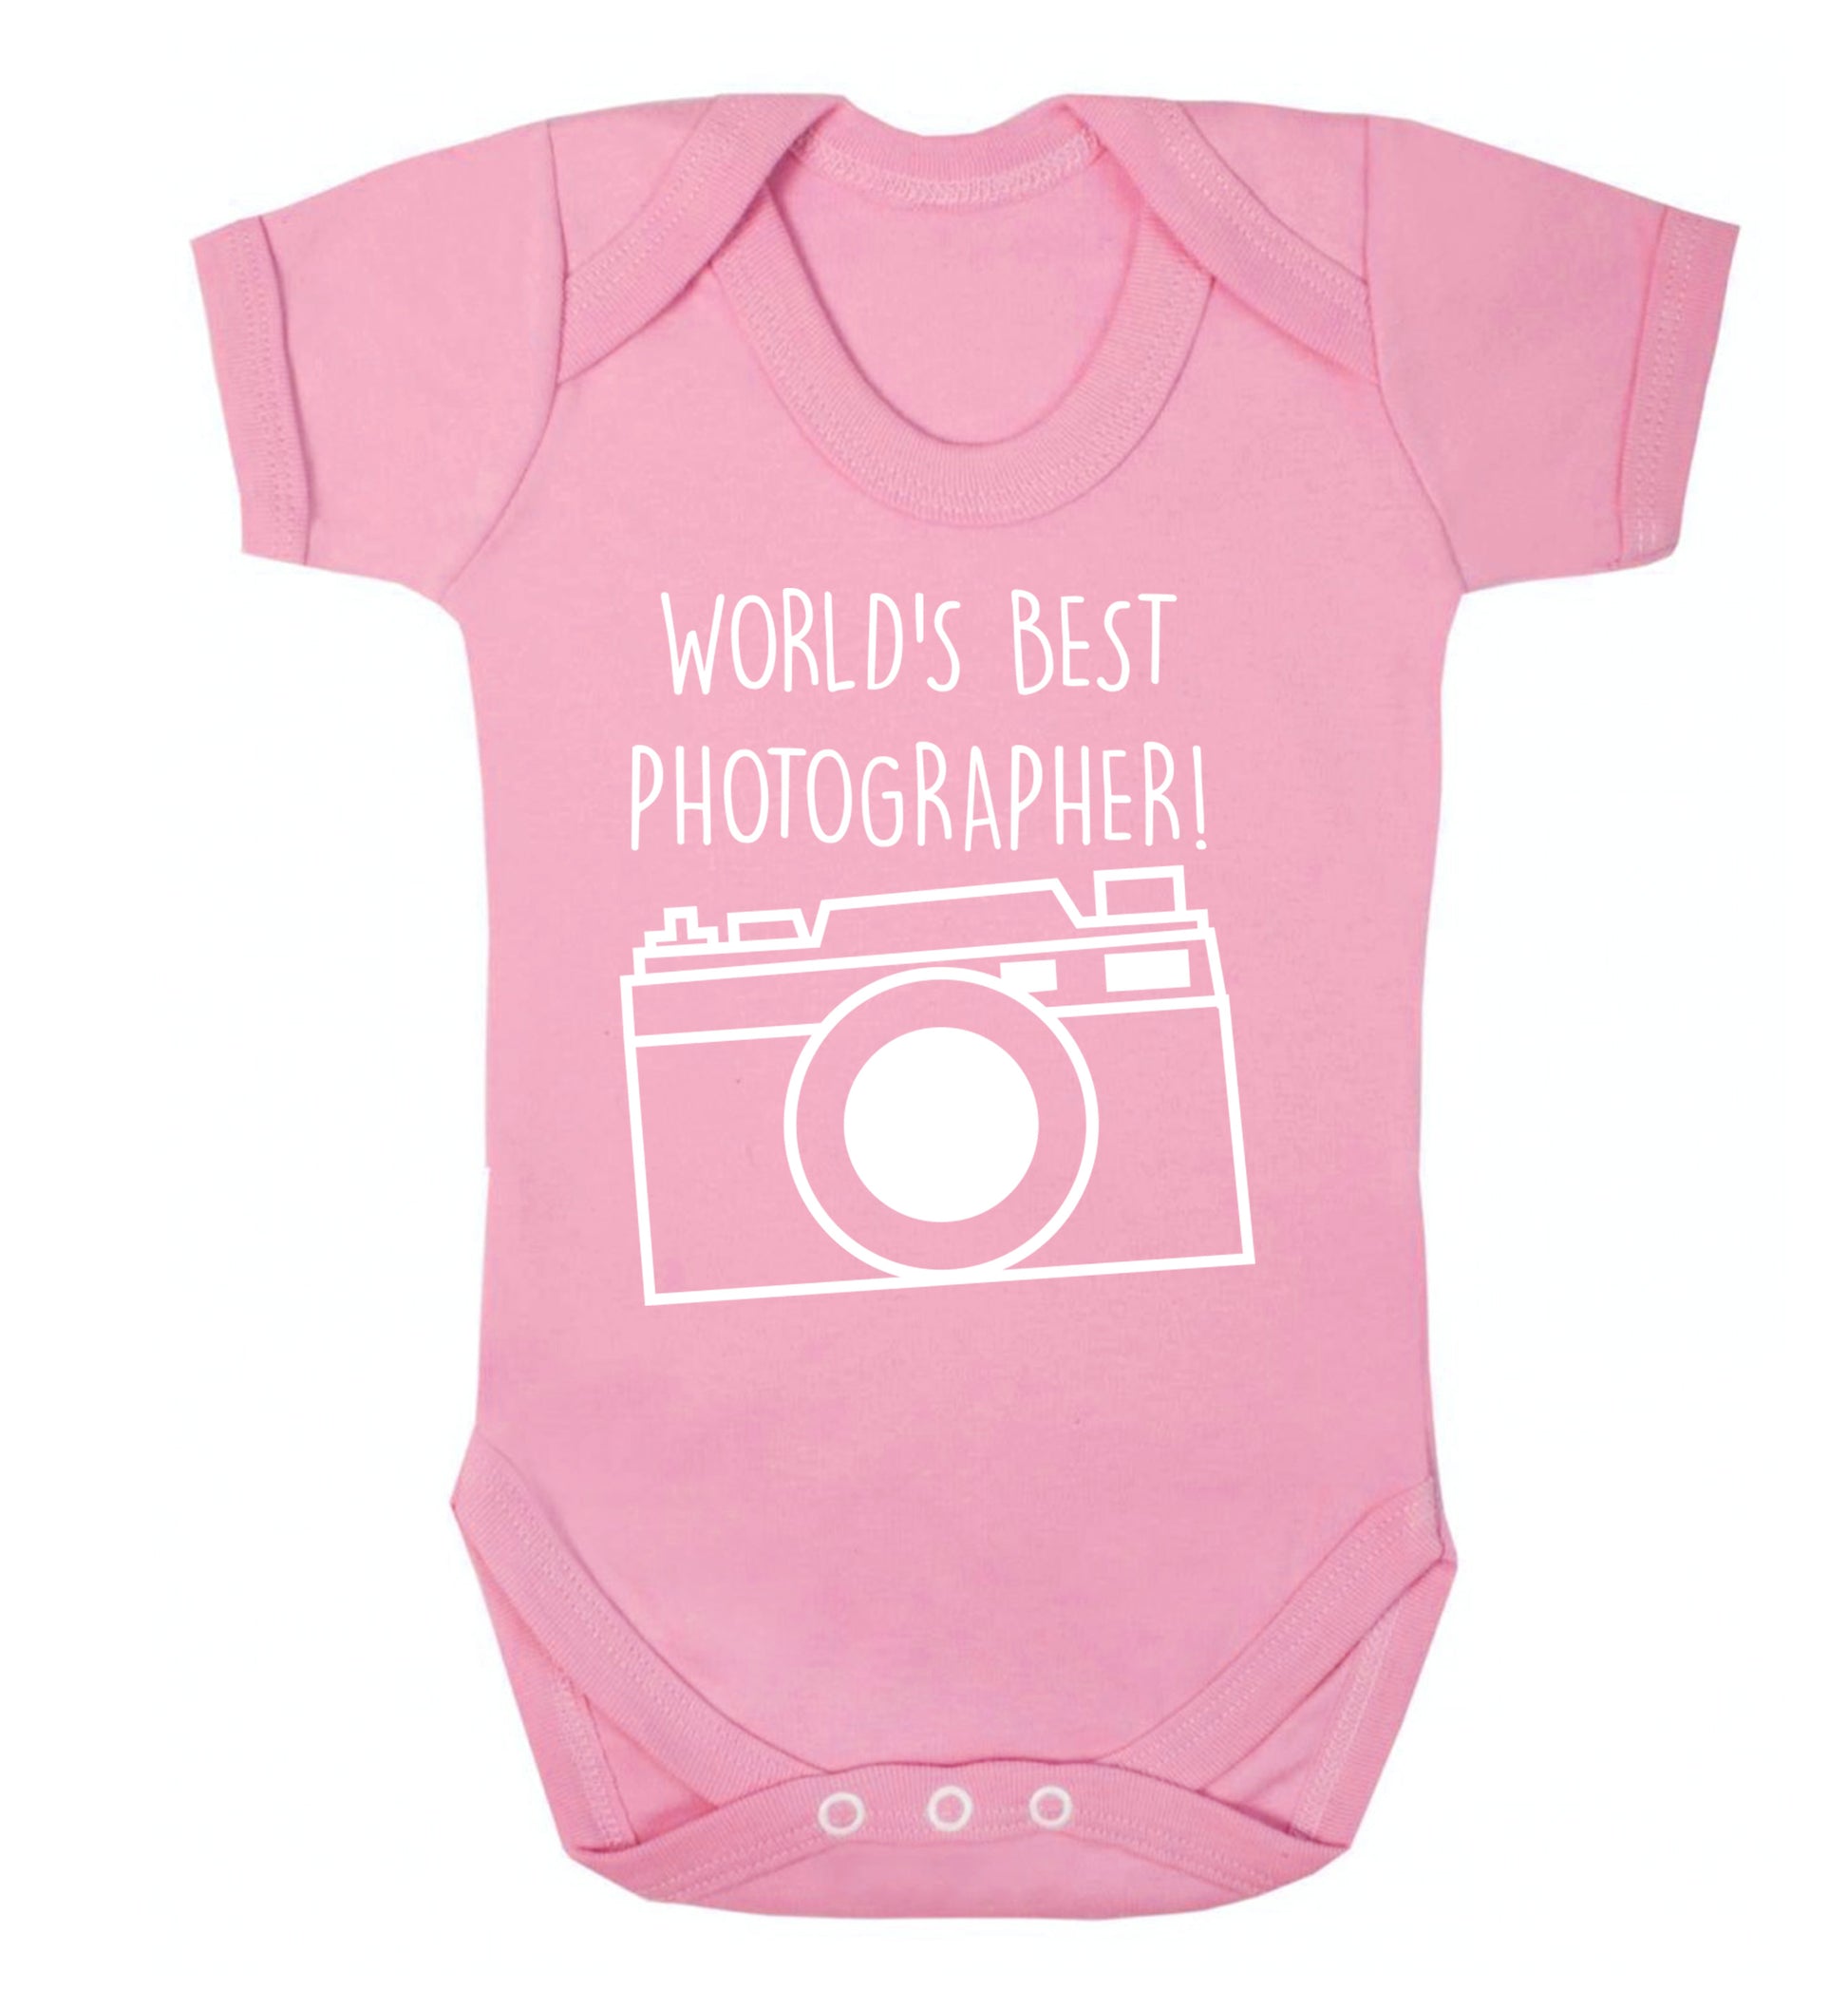 Worlds best photographer  Baby Vest pale pink 18-24 months